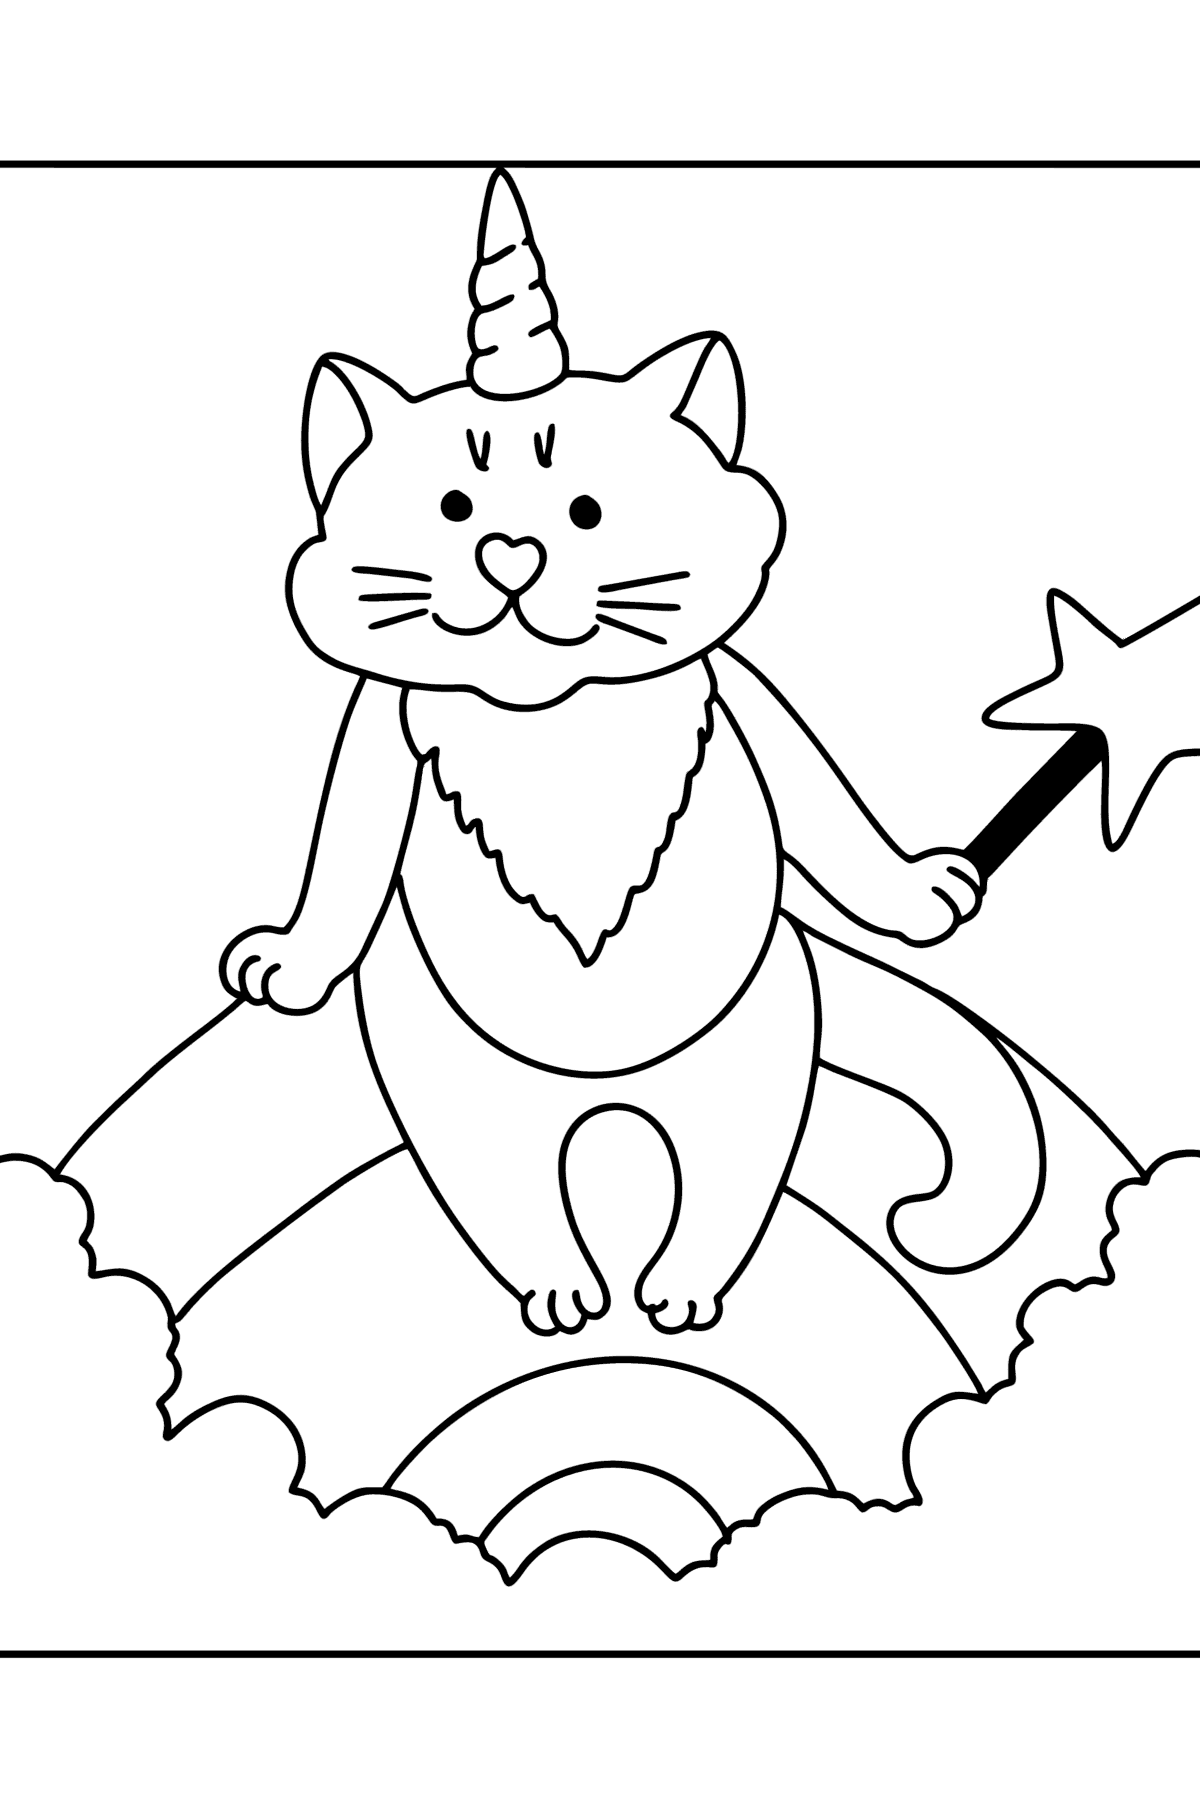 Tegning til fargelegging kattunge enhjørning - Tegninger til fargelegging for barn